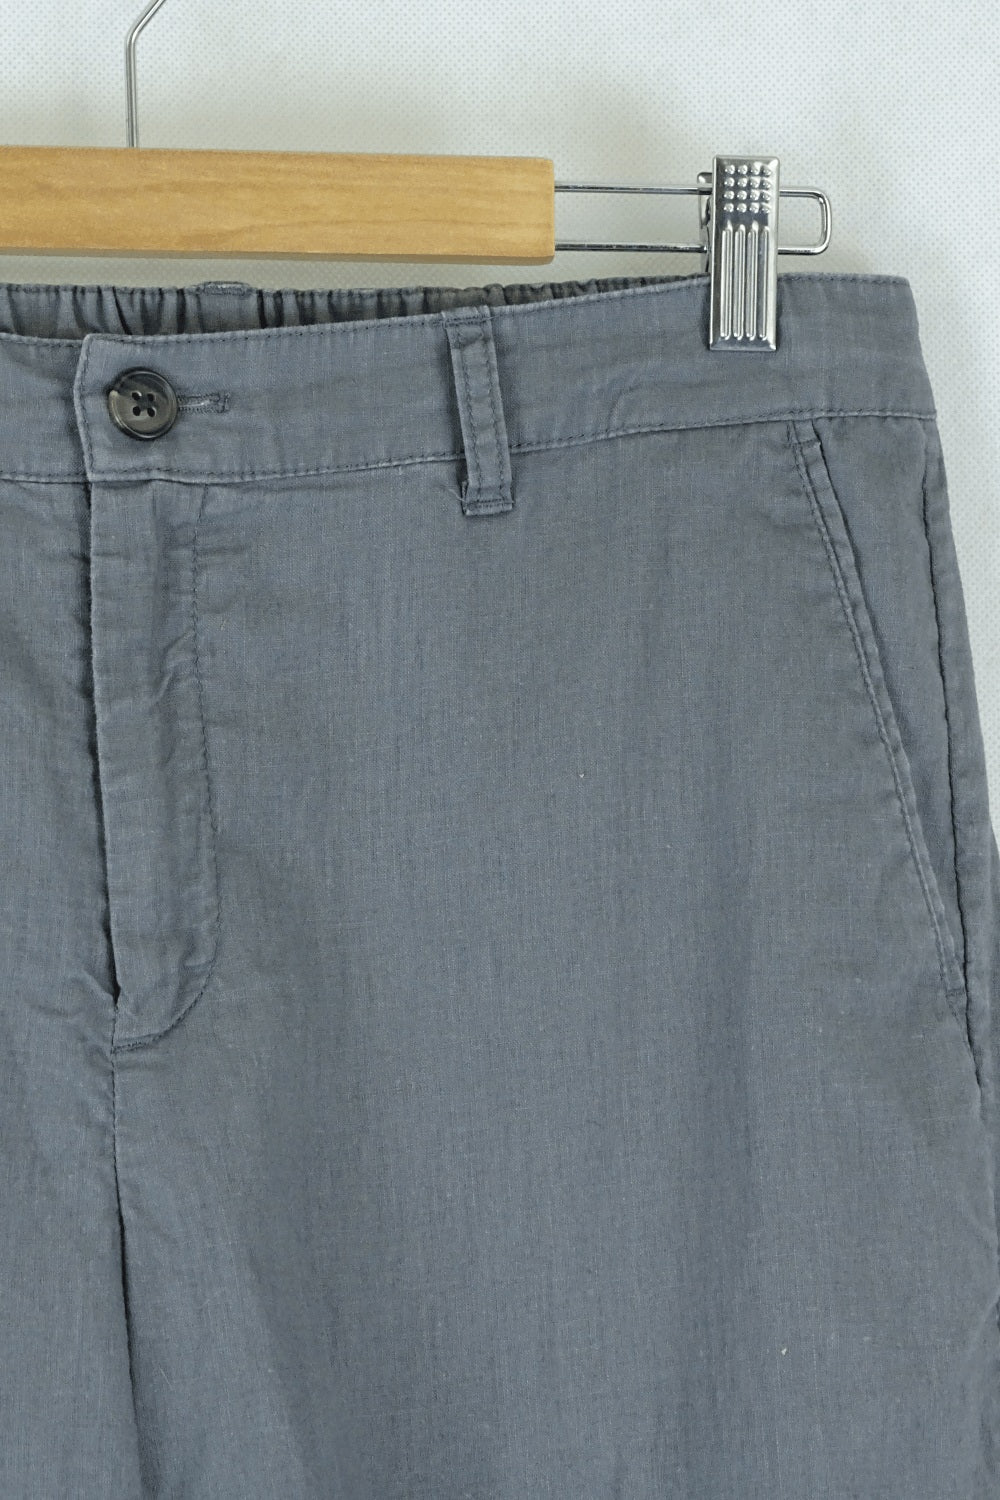 Uniqlo Grey Pants M